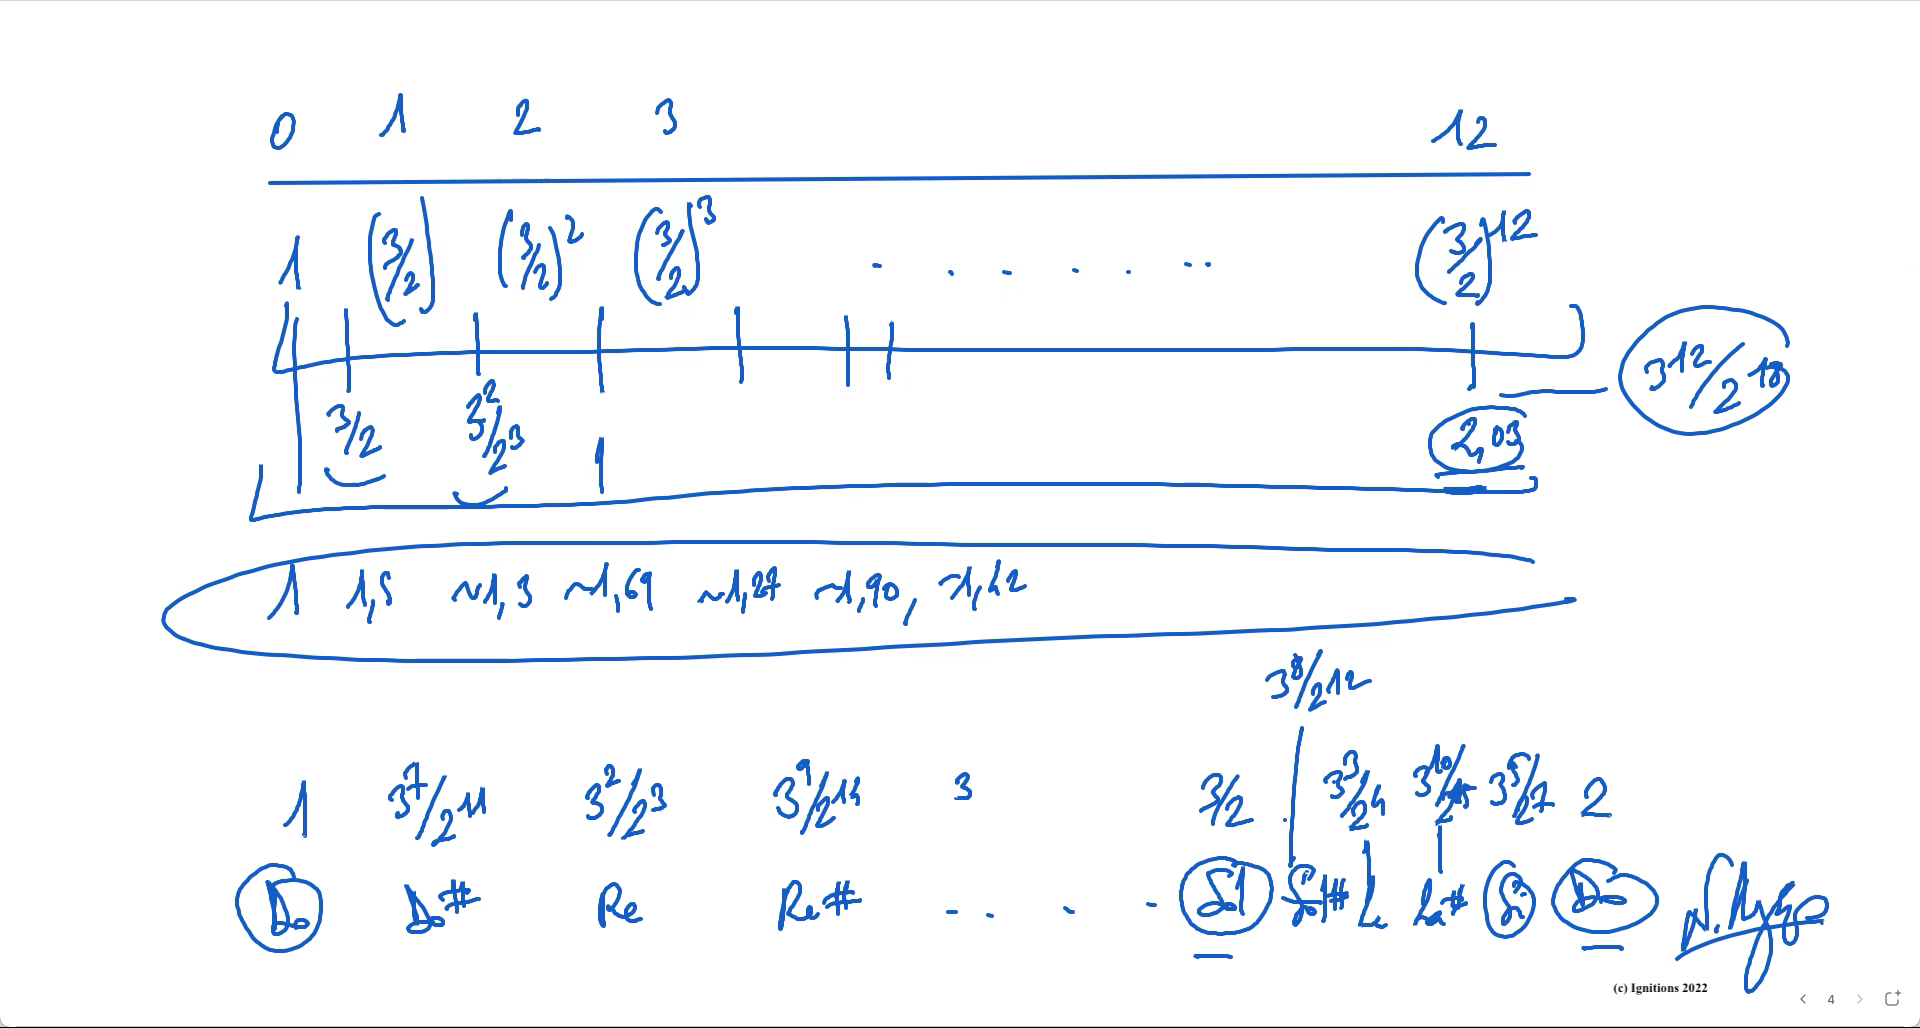 78414 - e-Μάθημα IV: Μαθηματικά στη μουσική μέσω κλίμακας Πυθαγόρα. (Dessin)